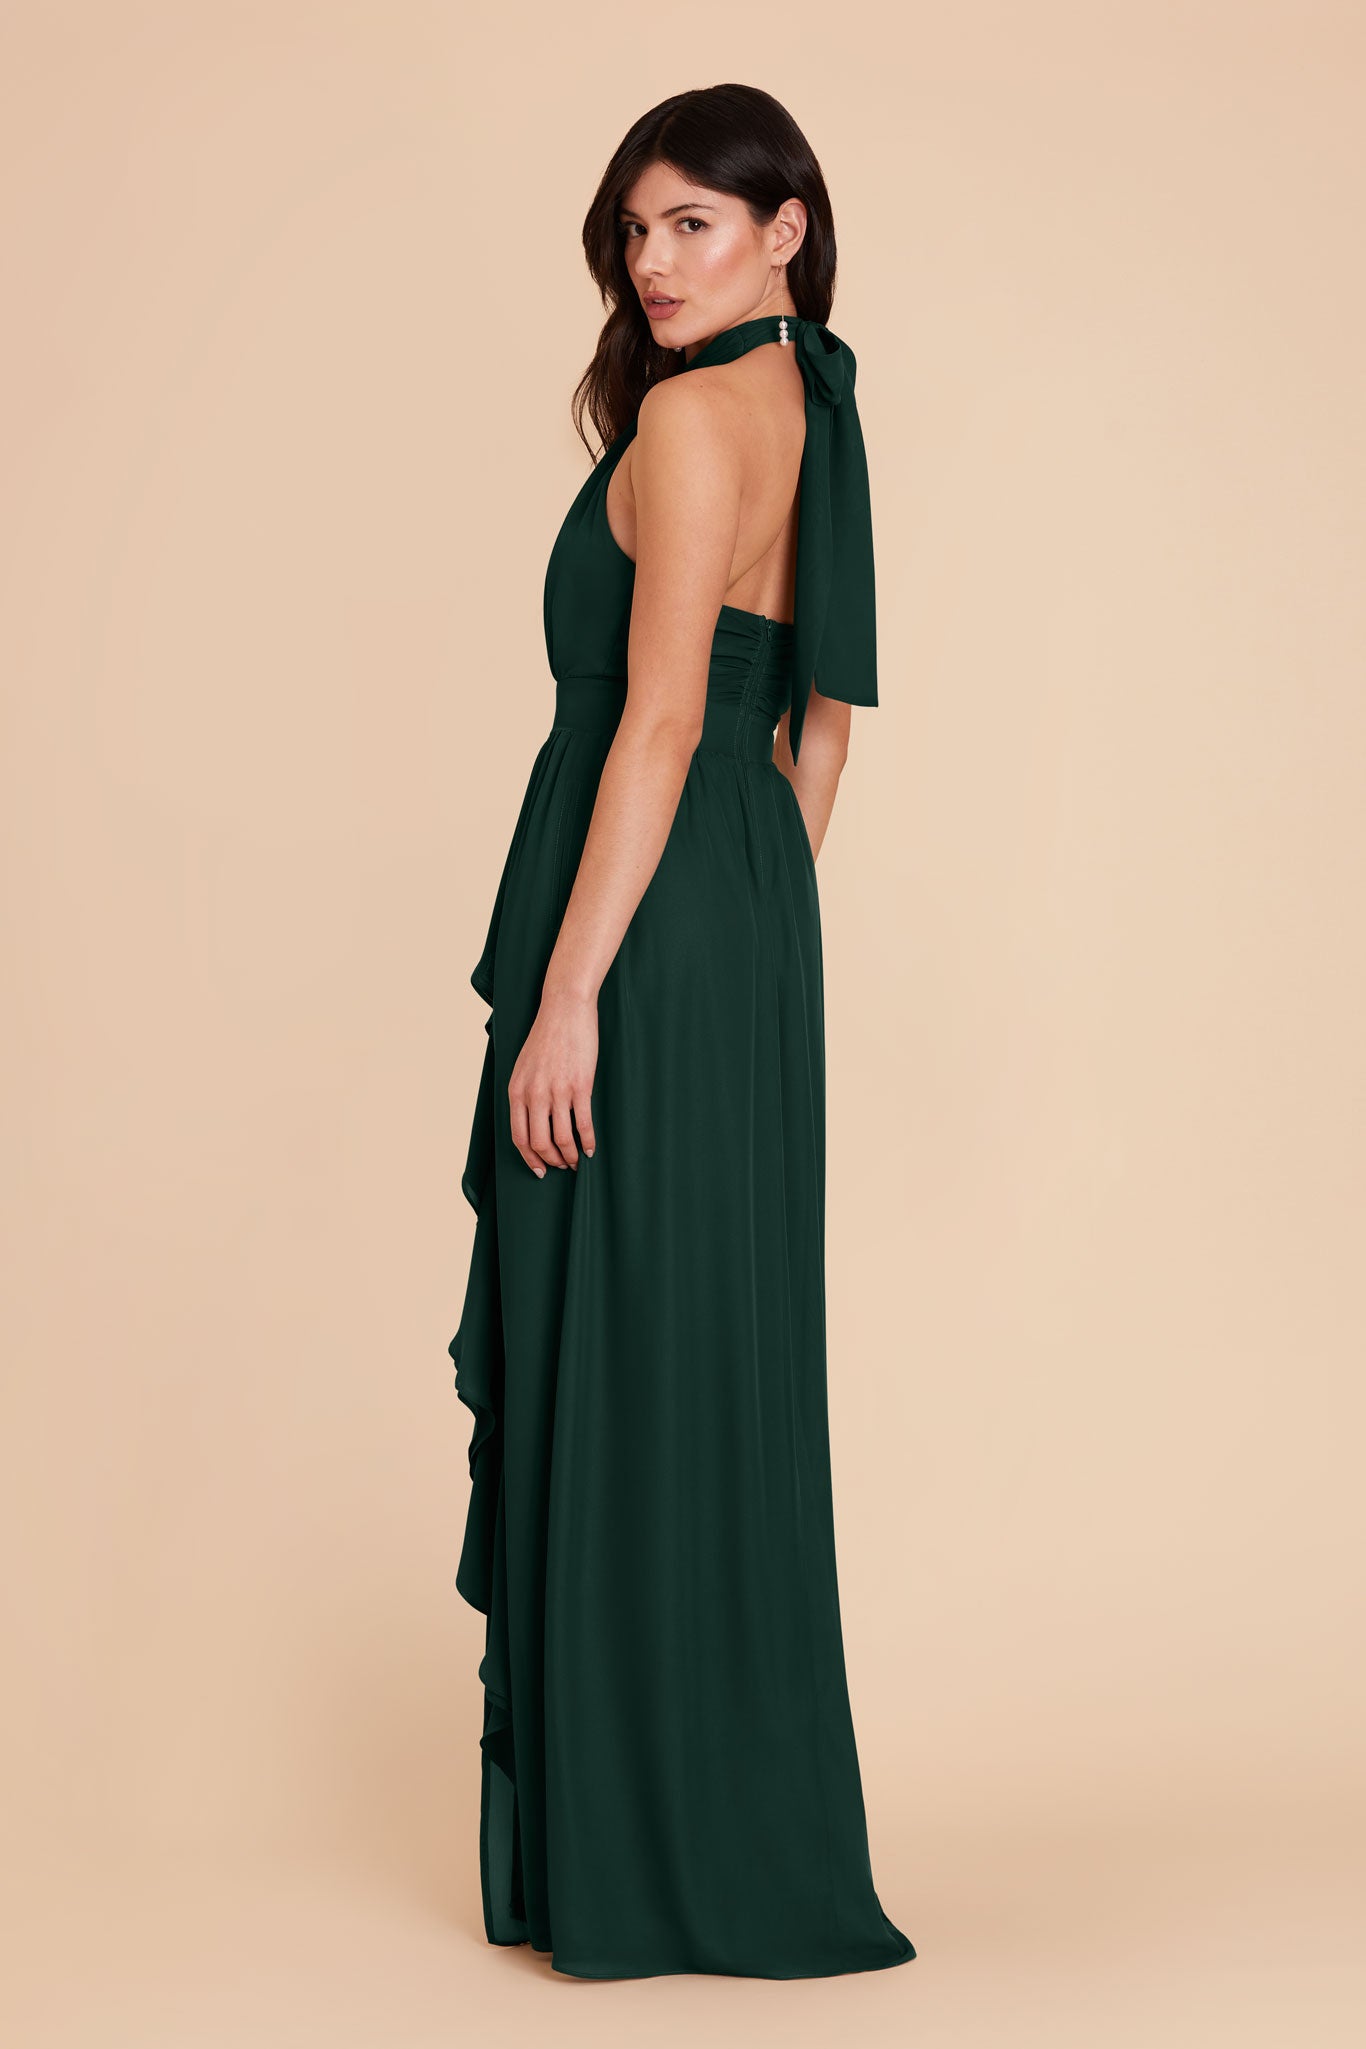 Emerald Joyce Chiffon Dress by Birdy Grey